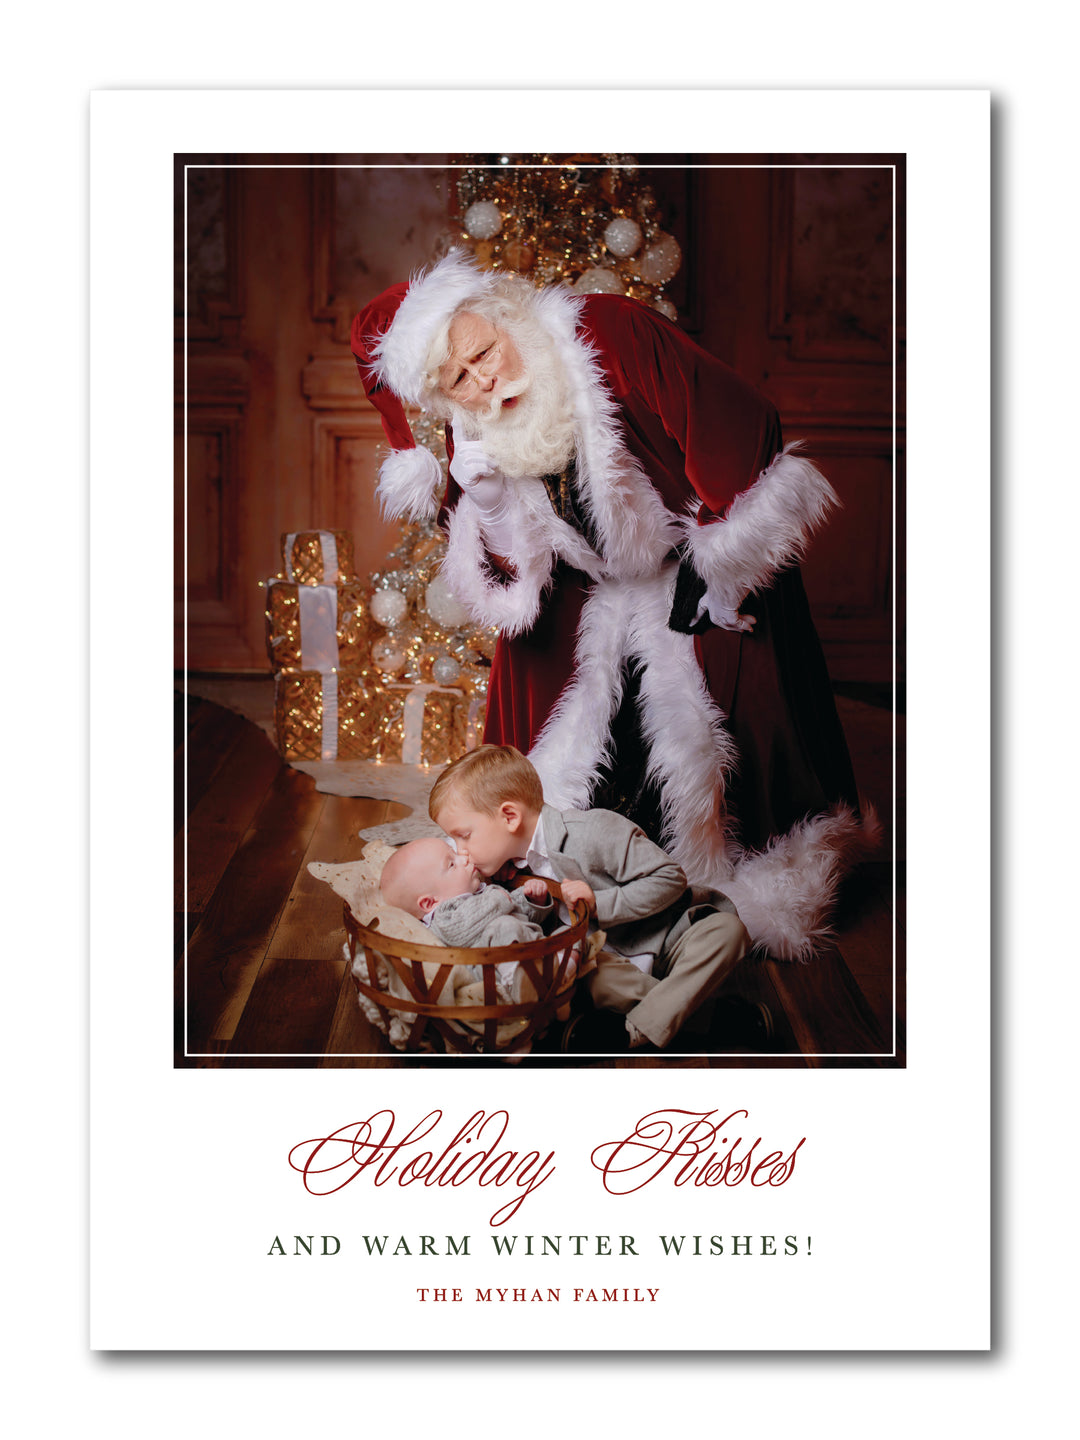 The Myhan Christmas Card